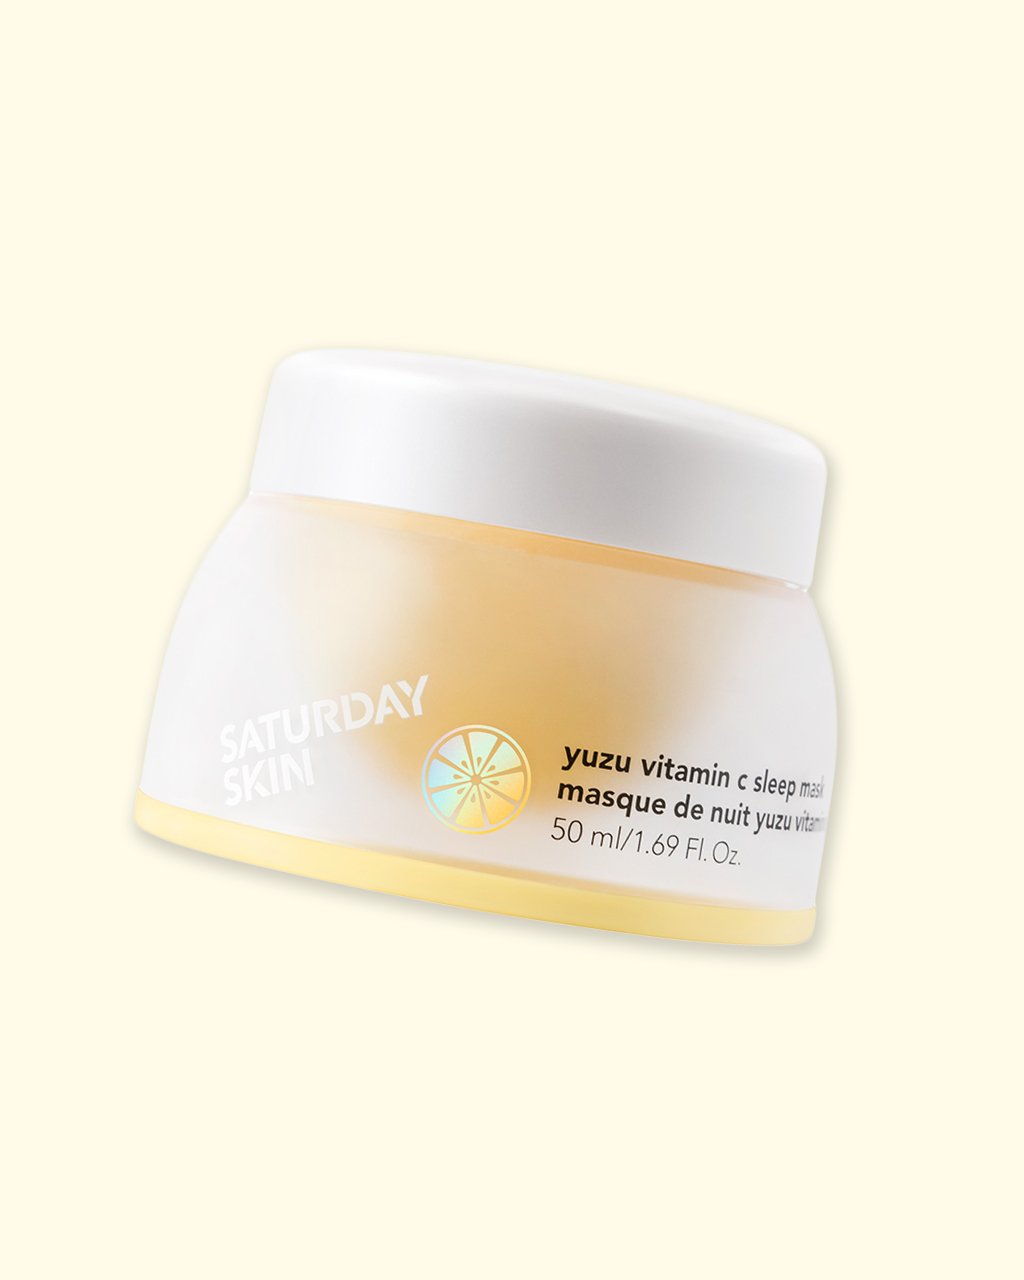 Yuzu Vitamin C Sleep Mask Sleeping Pack SATURDAY SKIN 